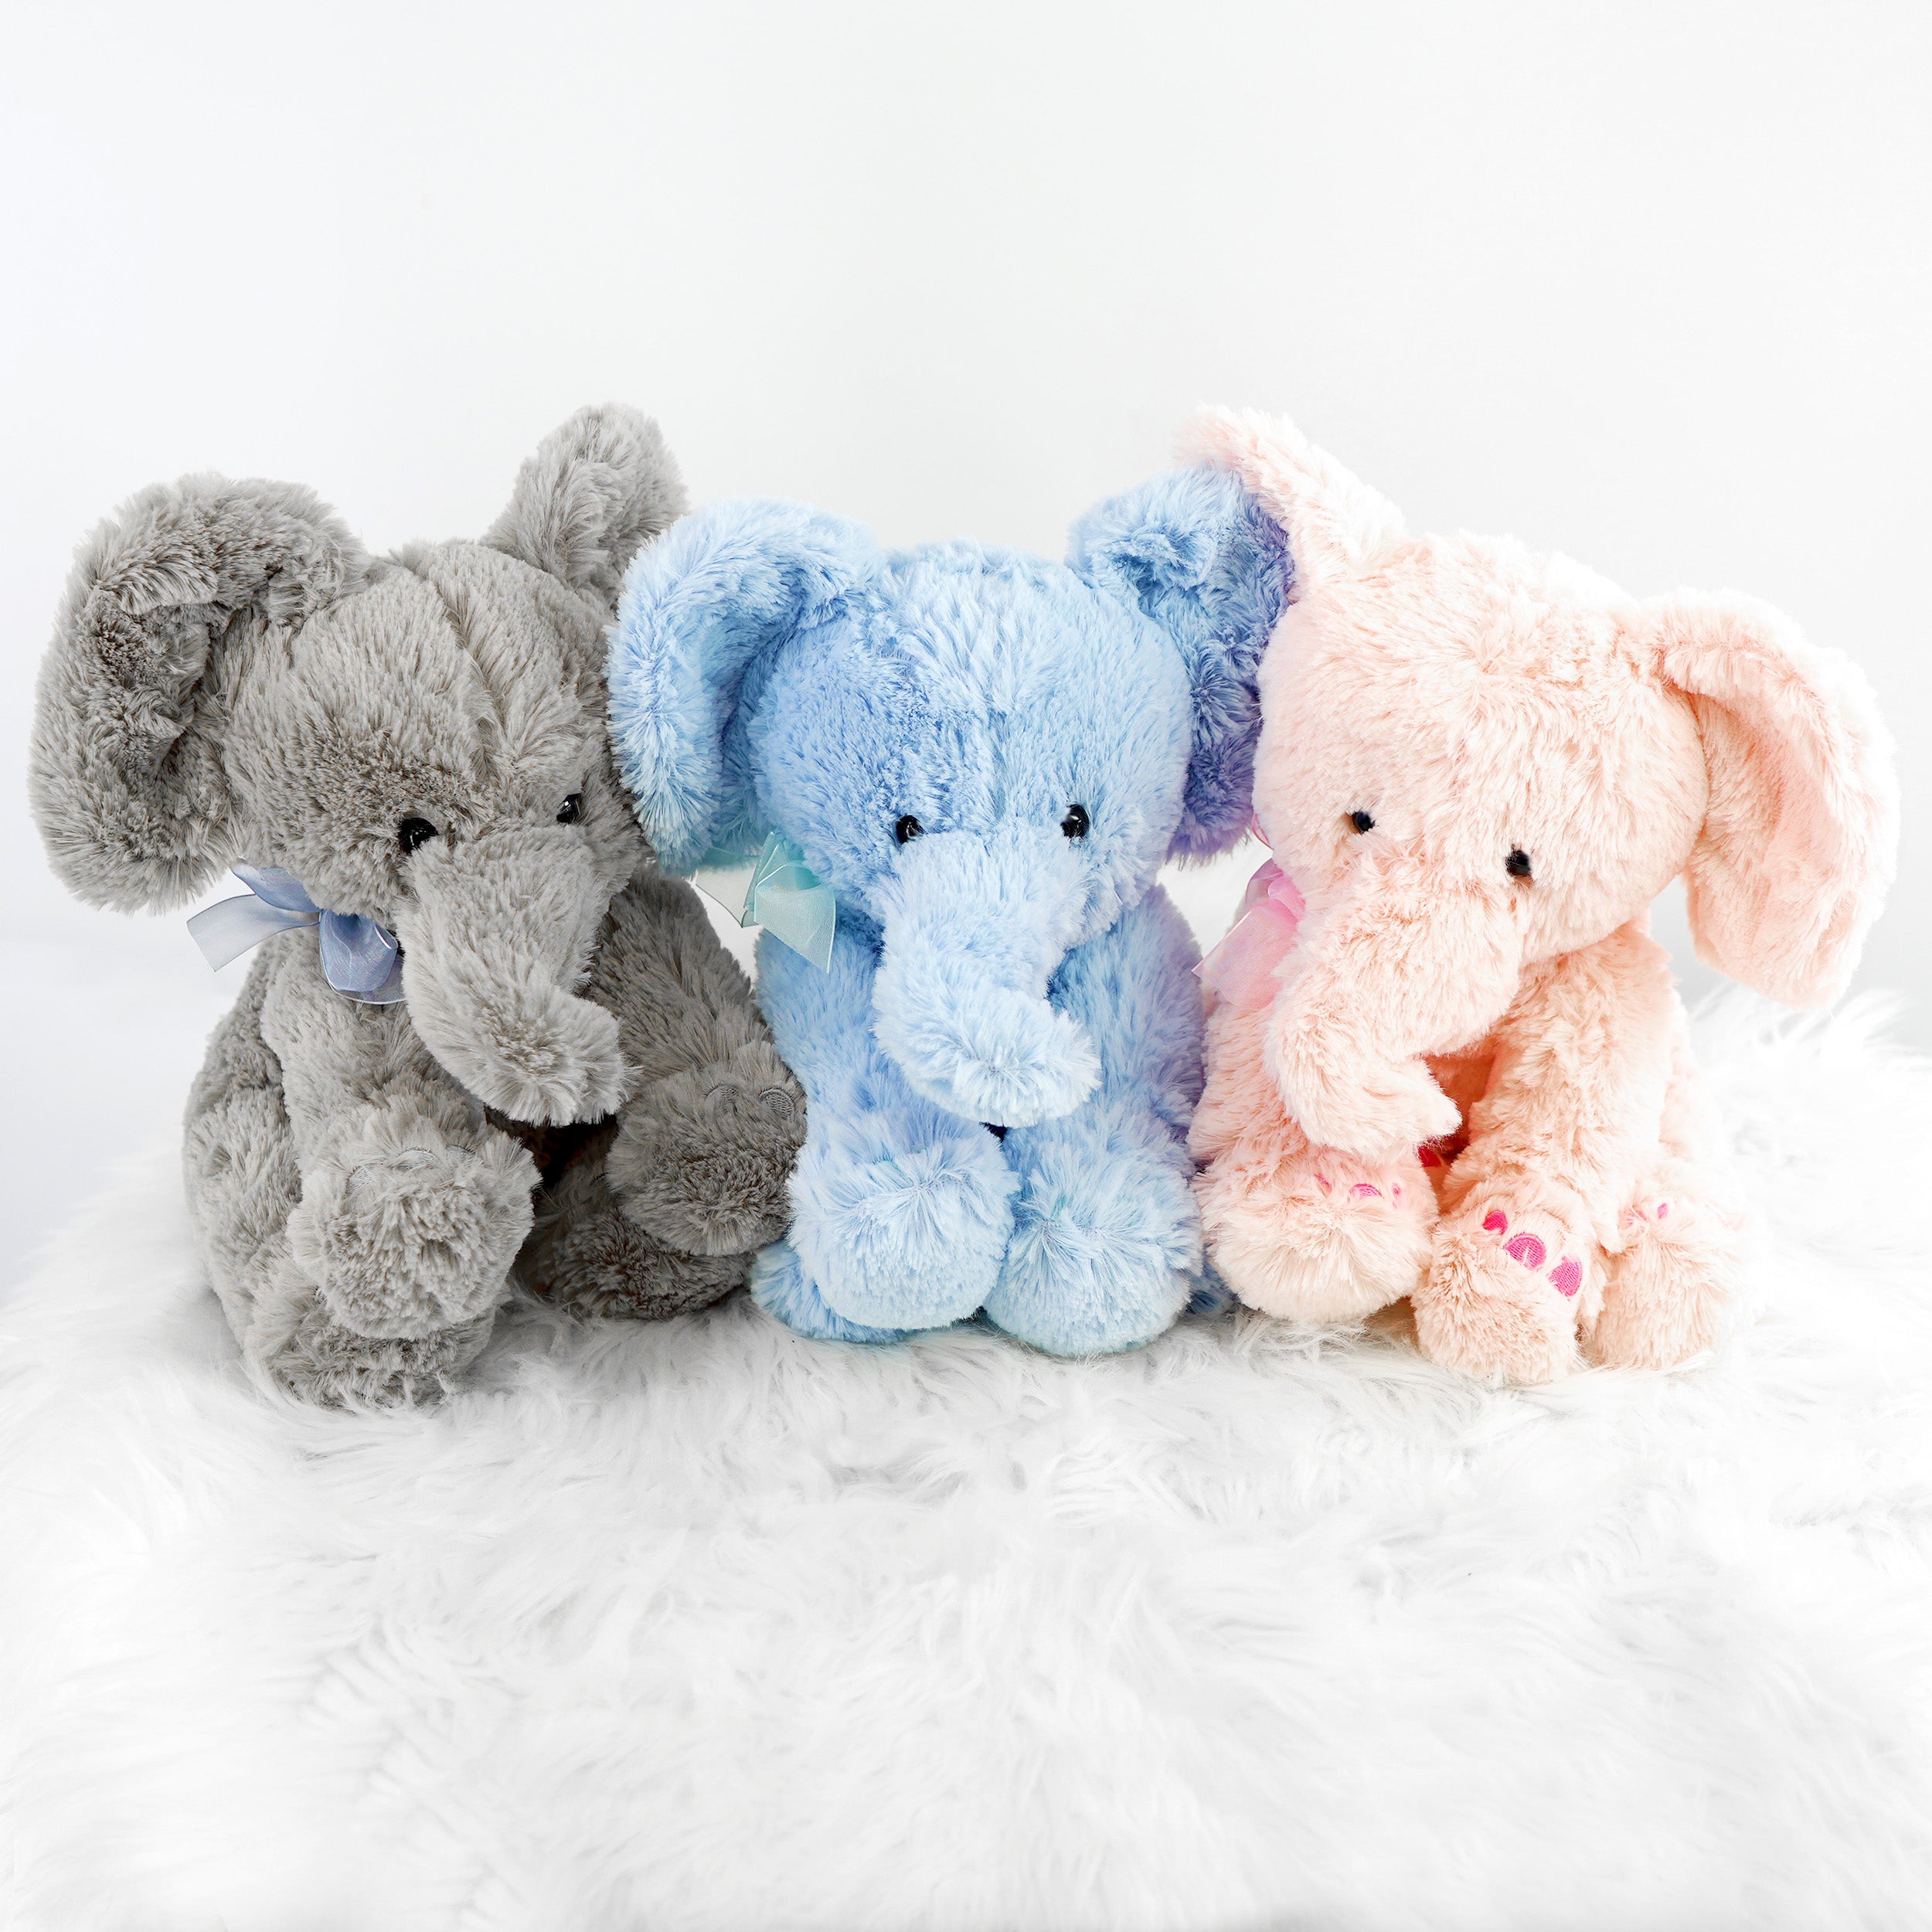 The Magic Toy Shop Soft Toy Pink Plush Elephant Soft Toys